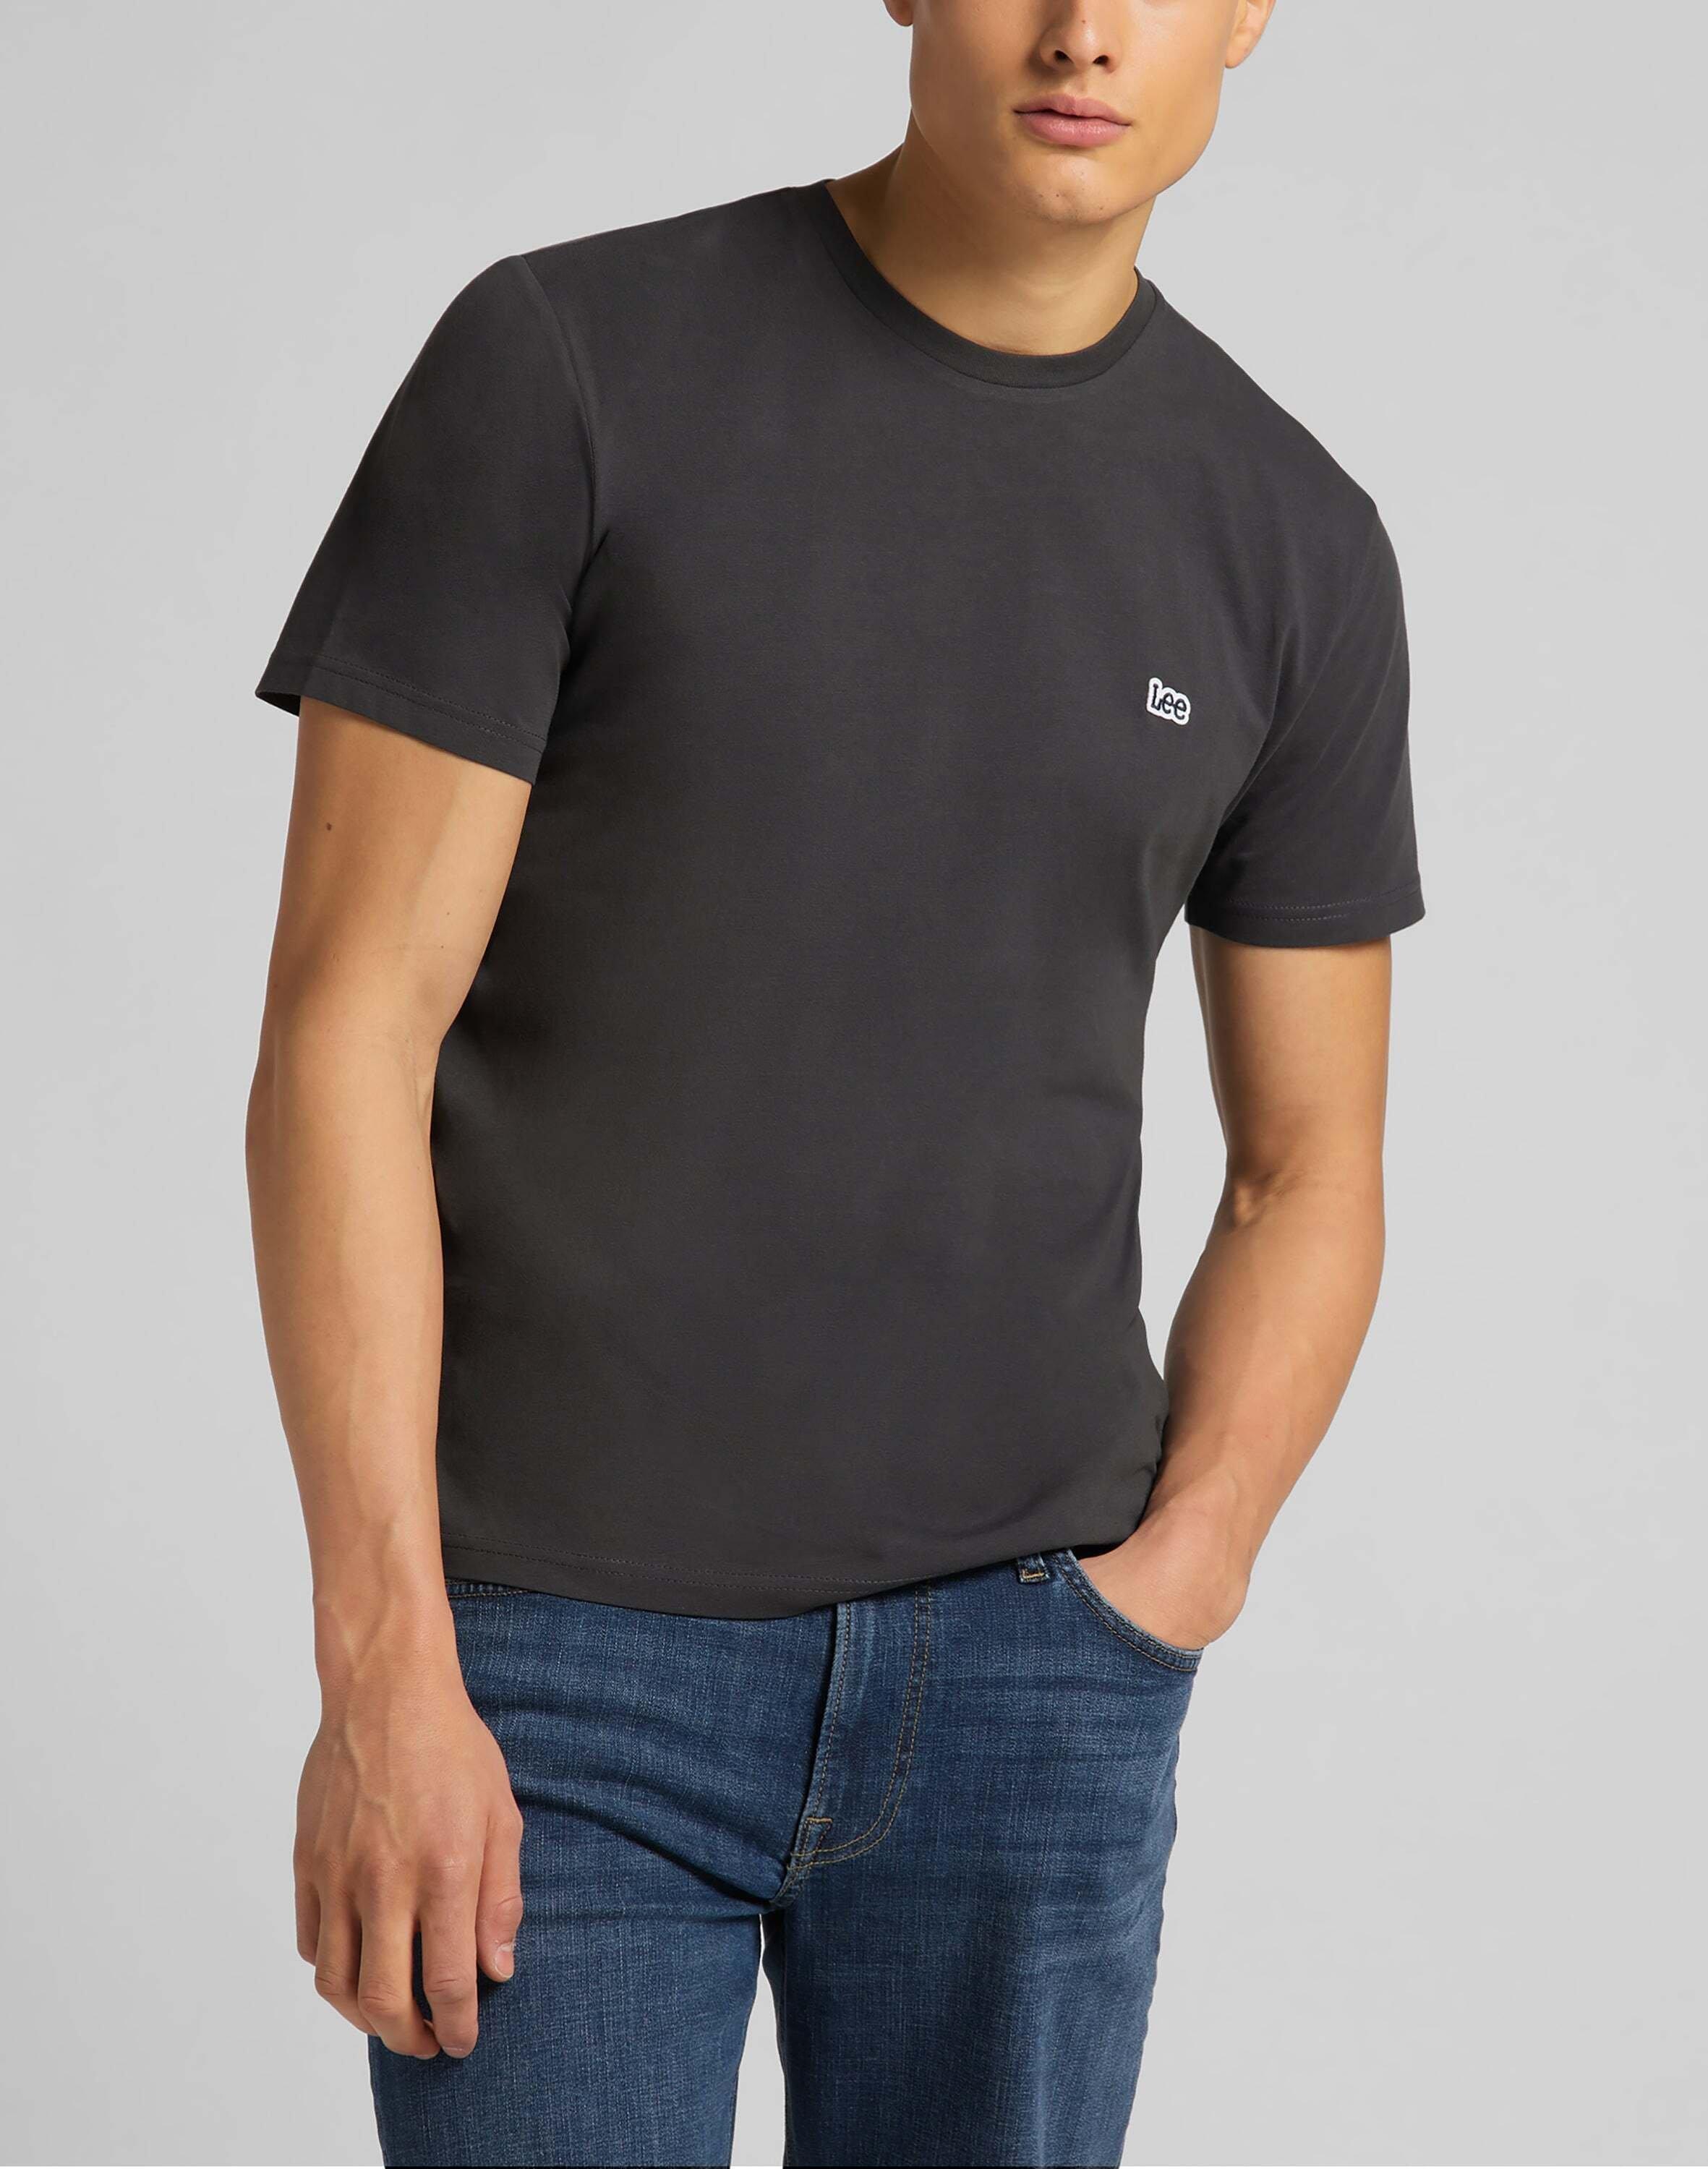 Lee  T-Shirt Patch Logo 